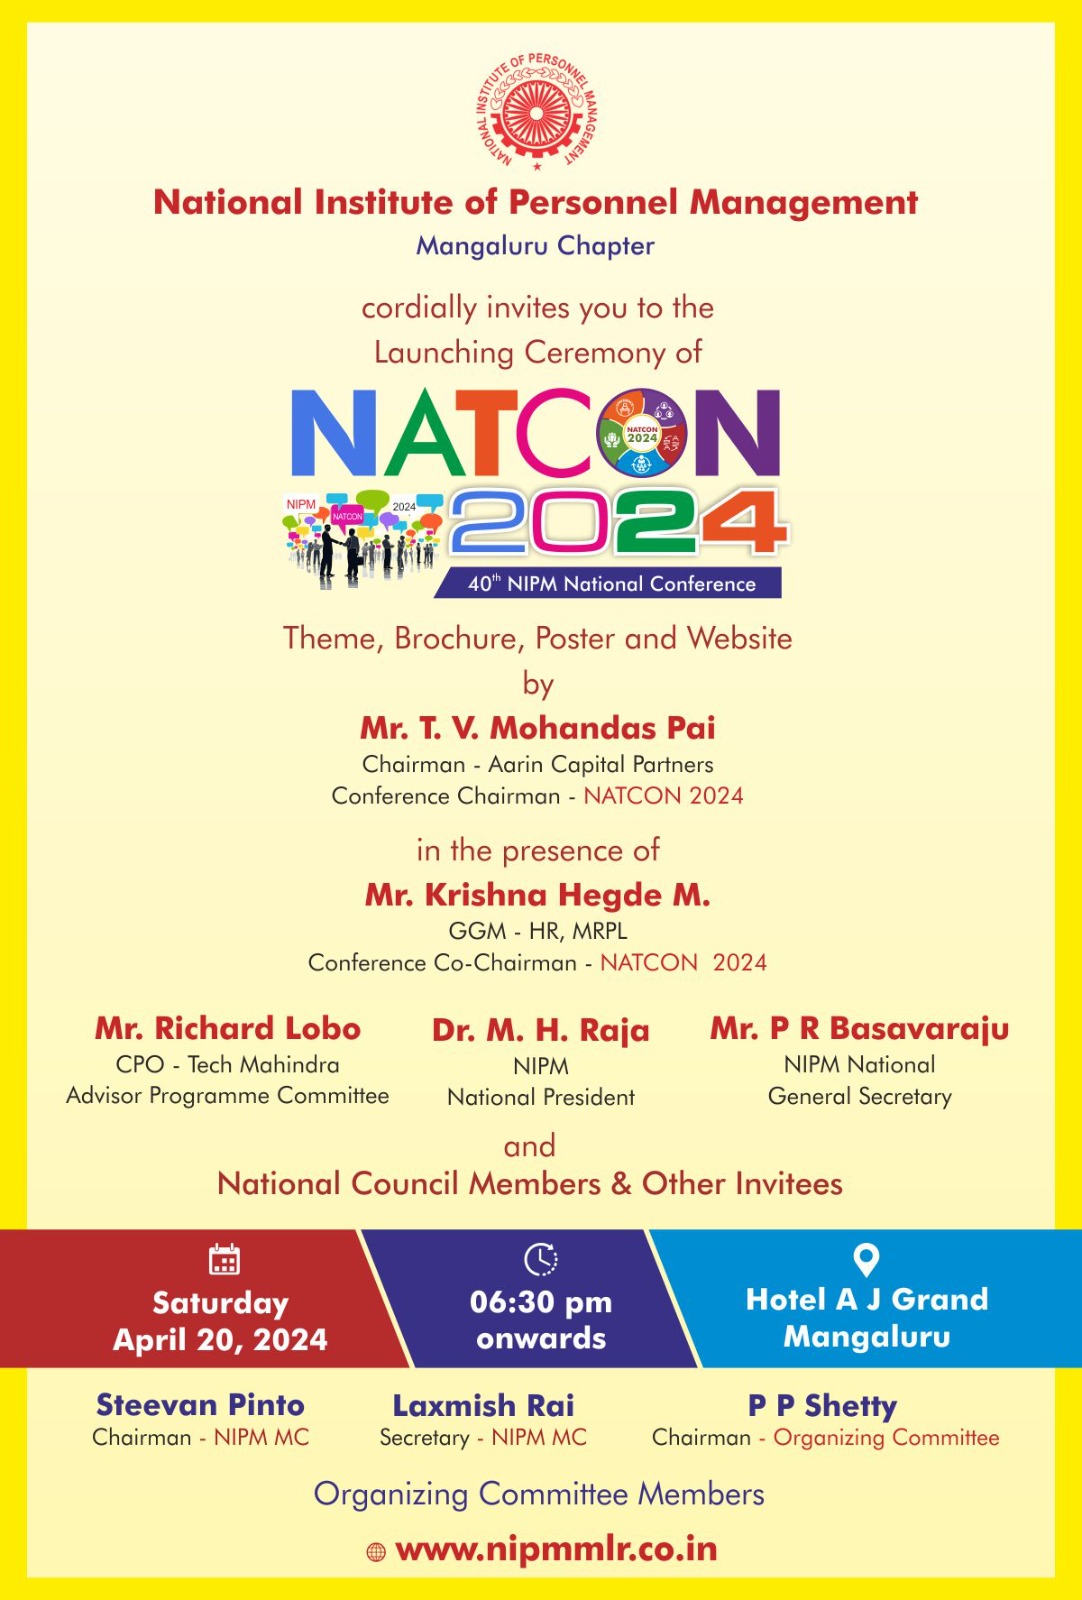 Mangaluru Chapter Hosts 40th NIPM National Conference - 40th NIPM National Conference